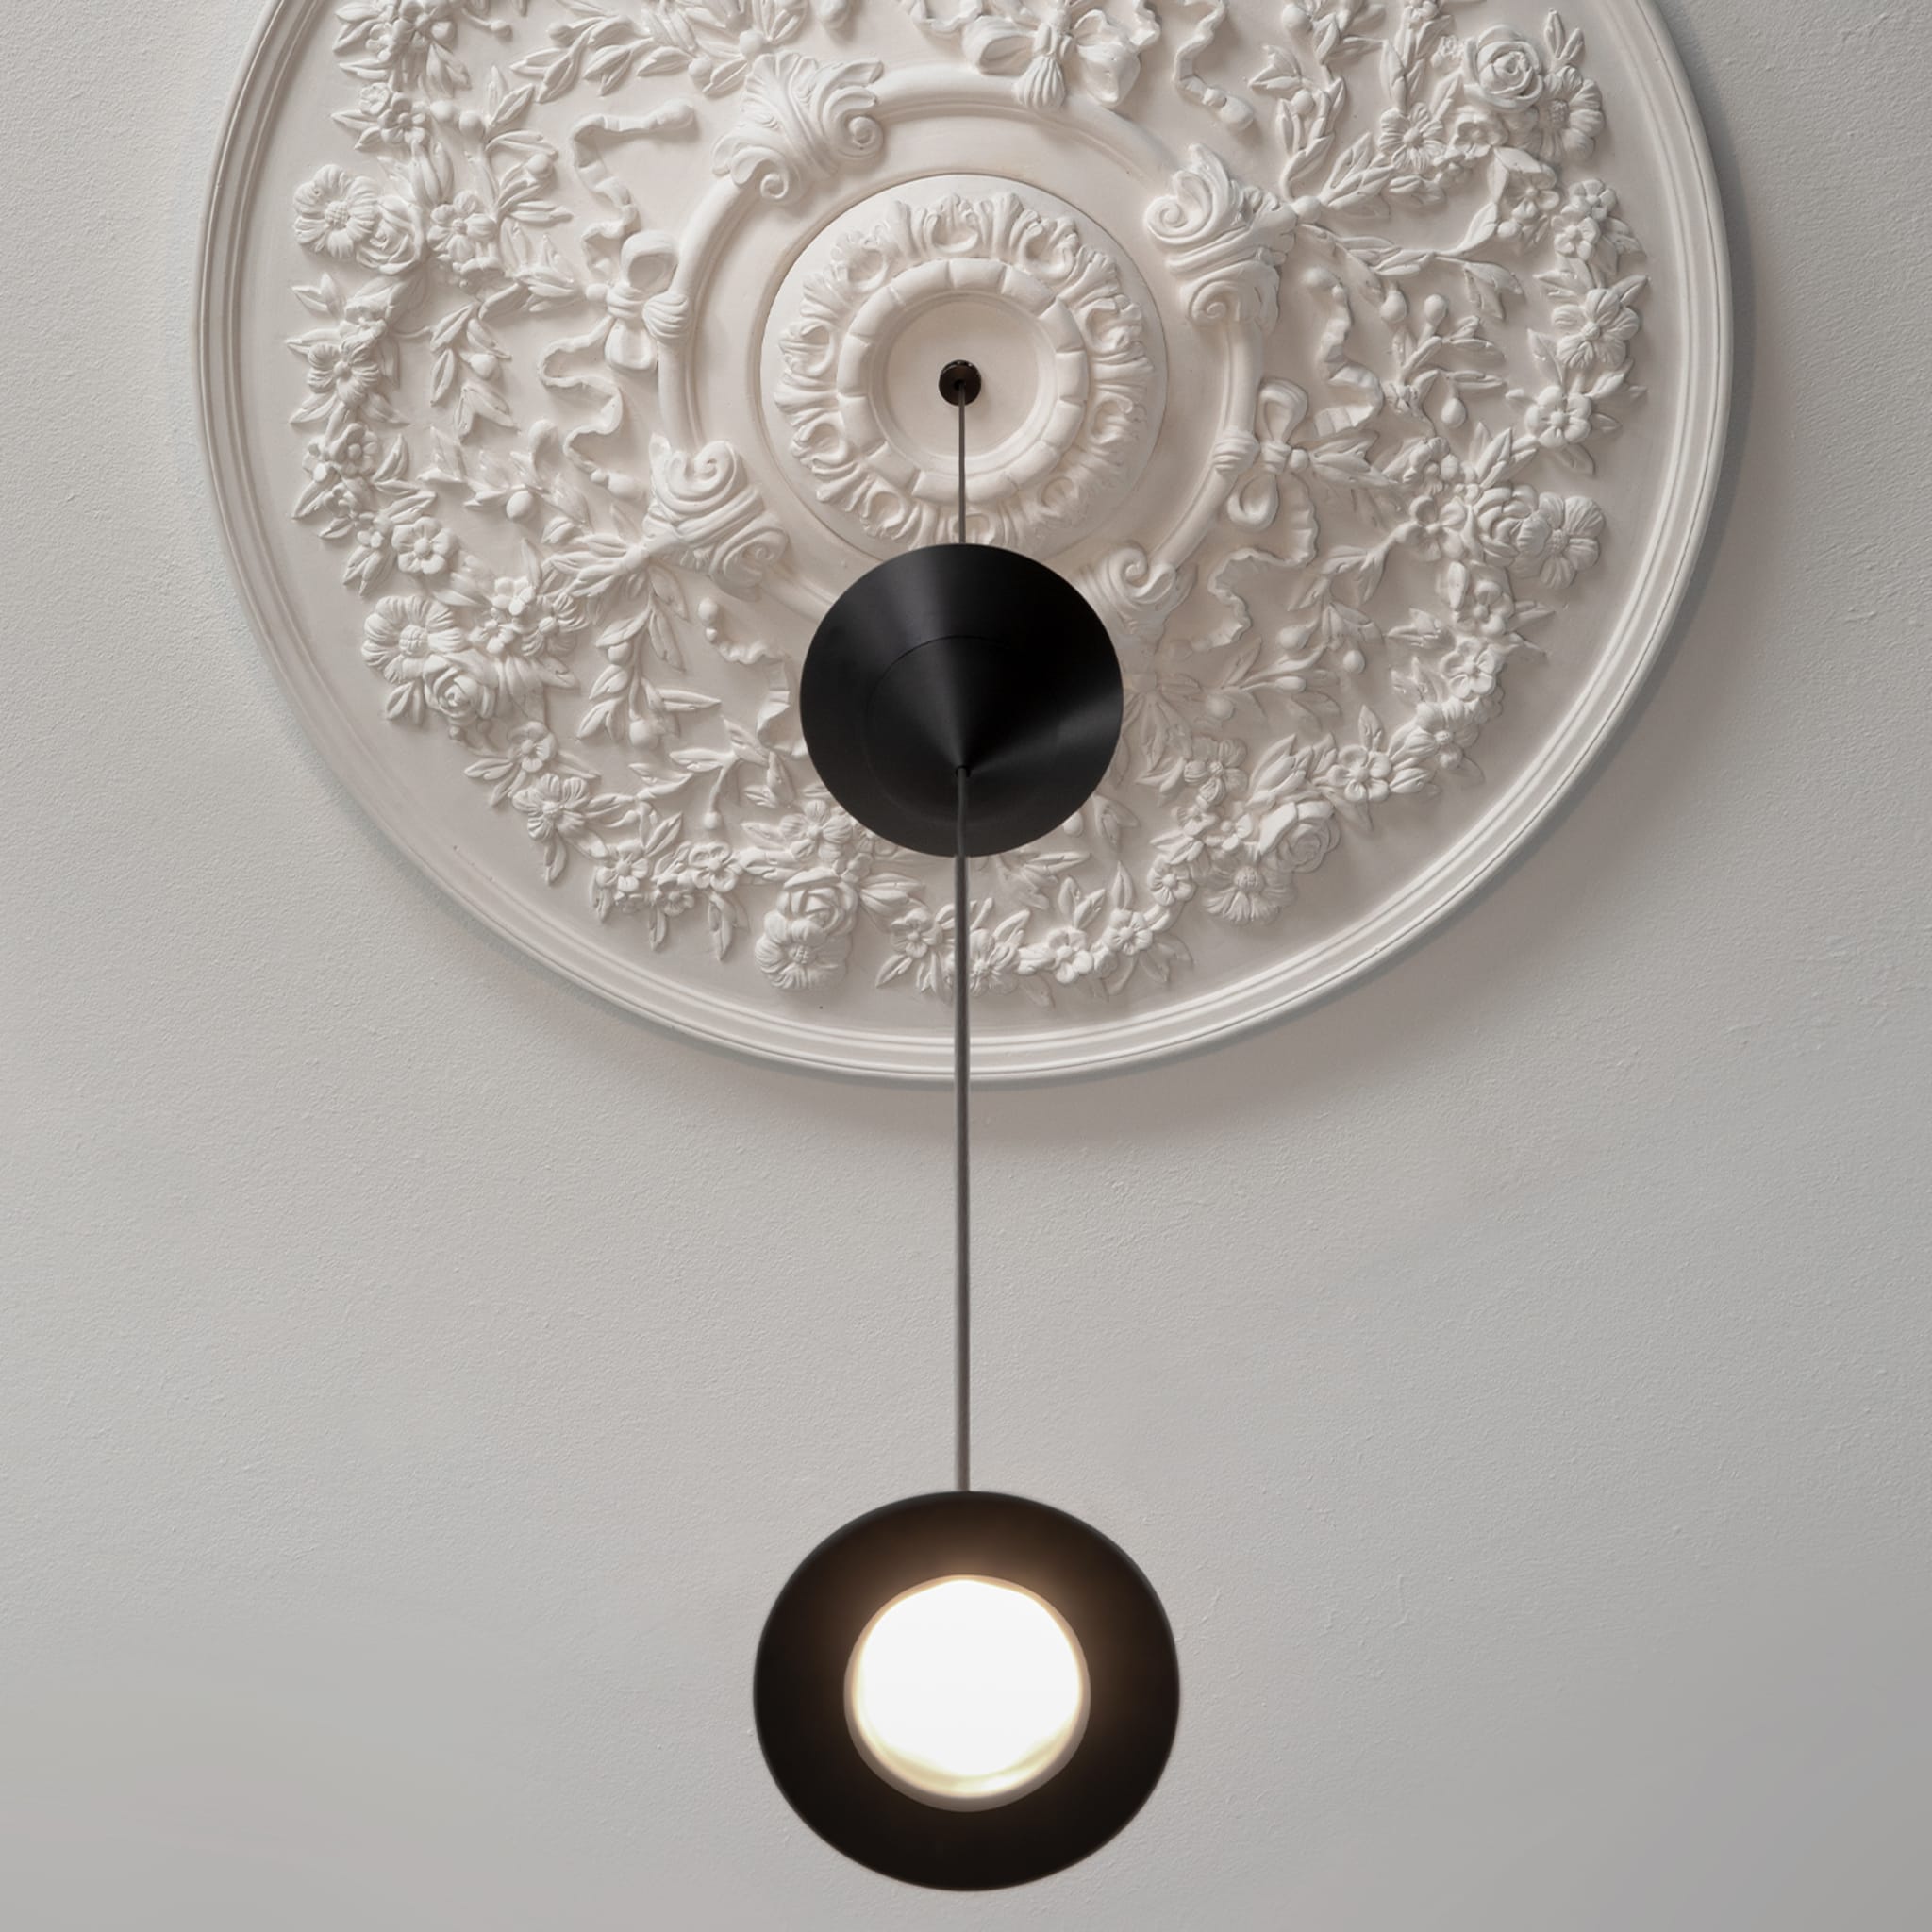 Moonbloom 2-Light Pendant Lamp by Matteo Ugolini - Alternative view 3